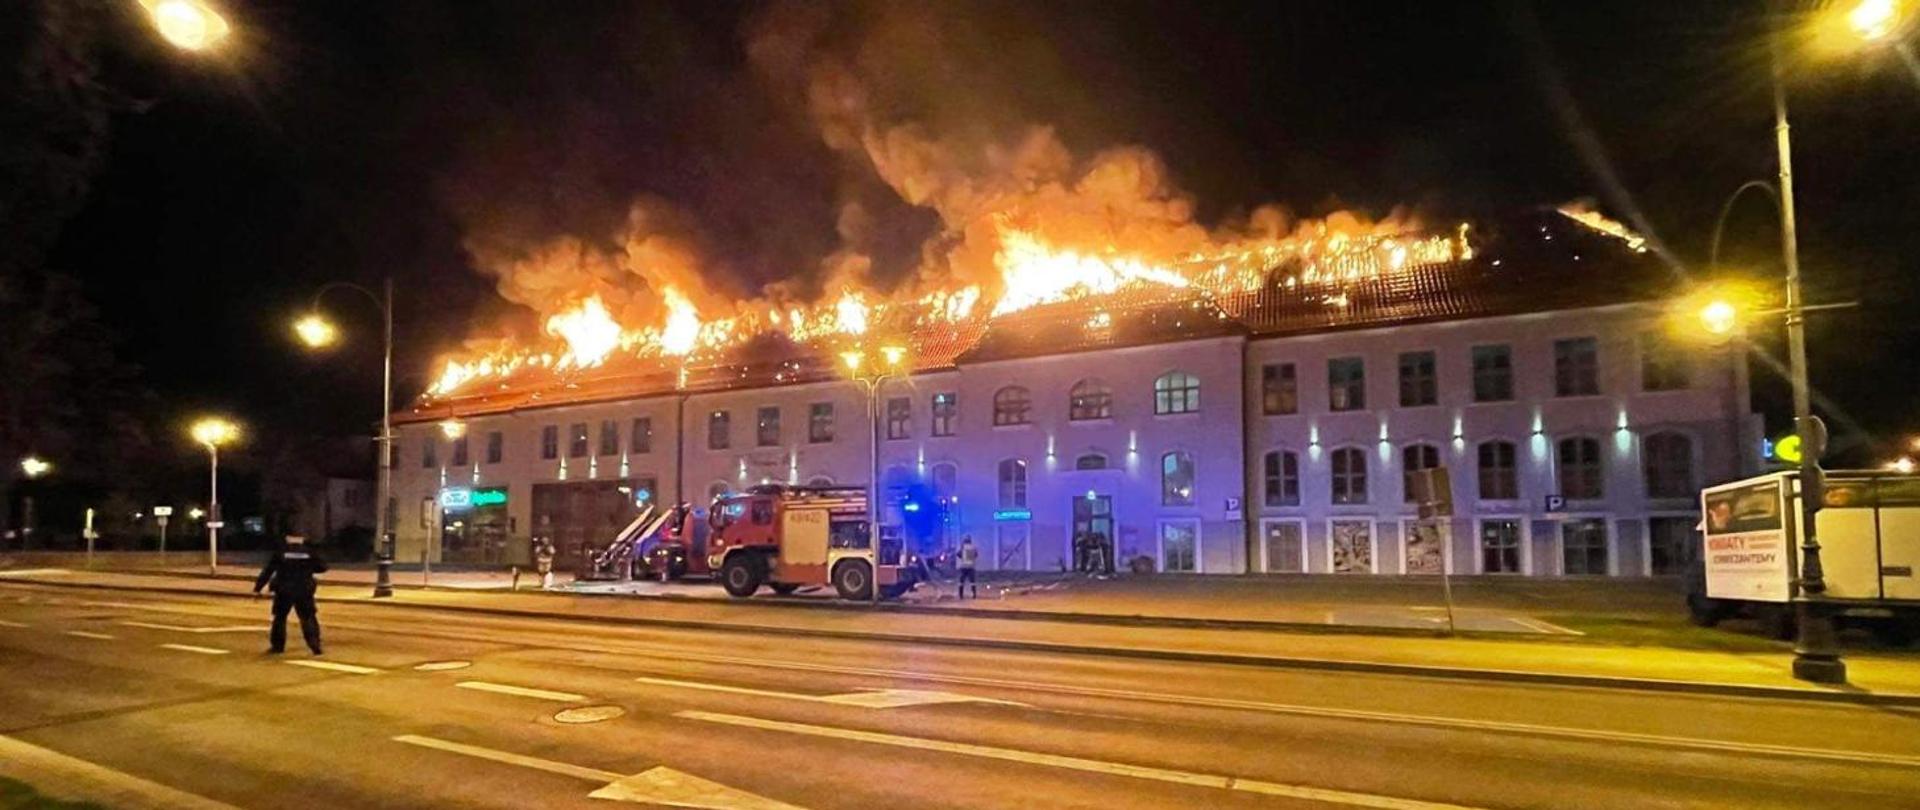 Widok pożaru dachu galerii w Ełku